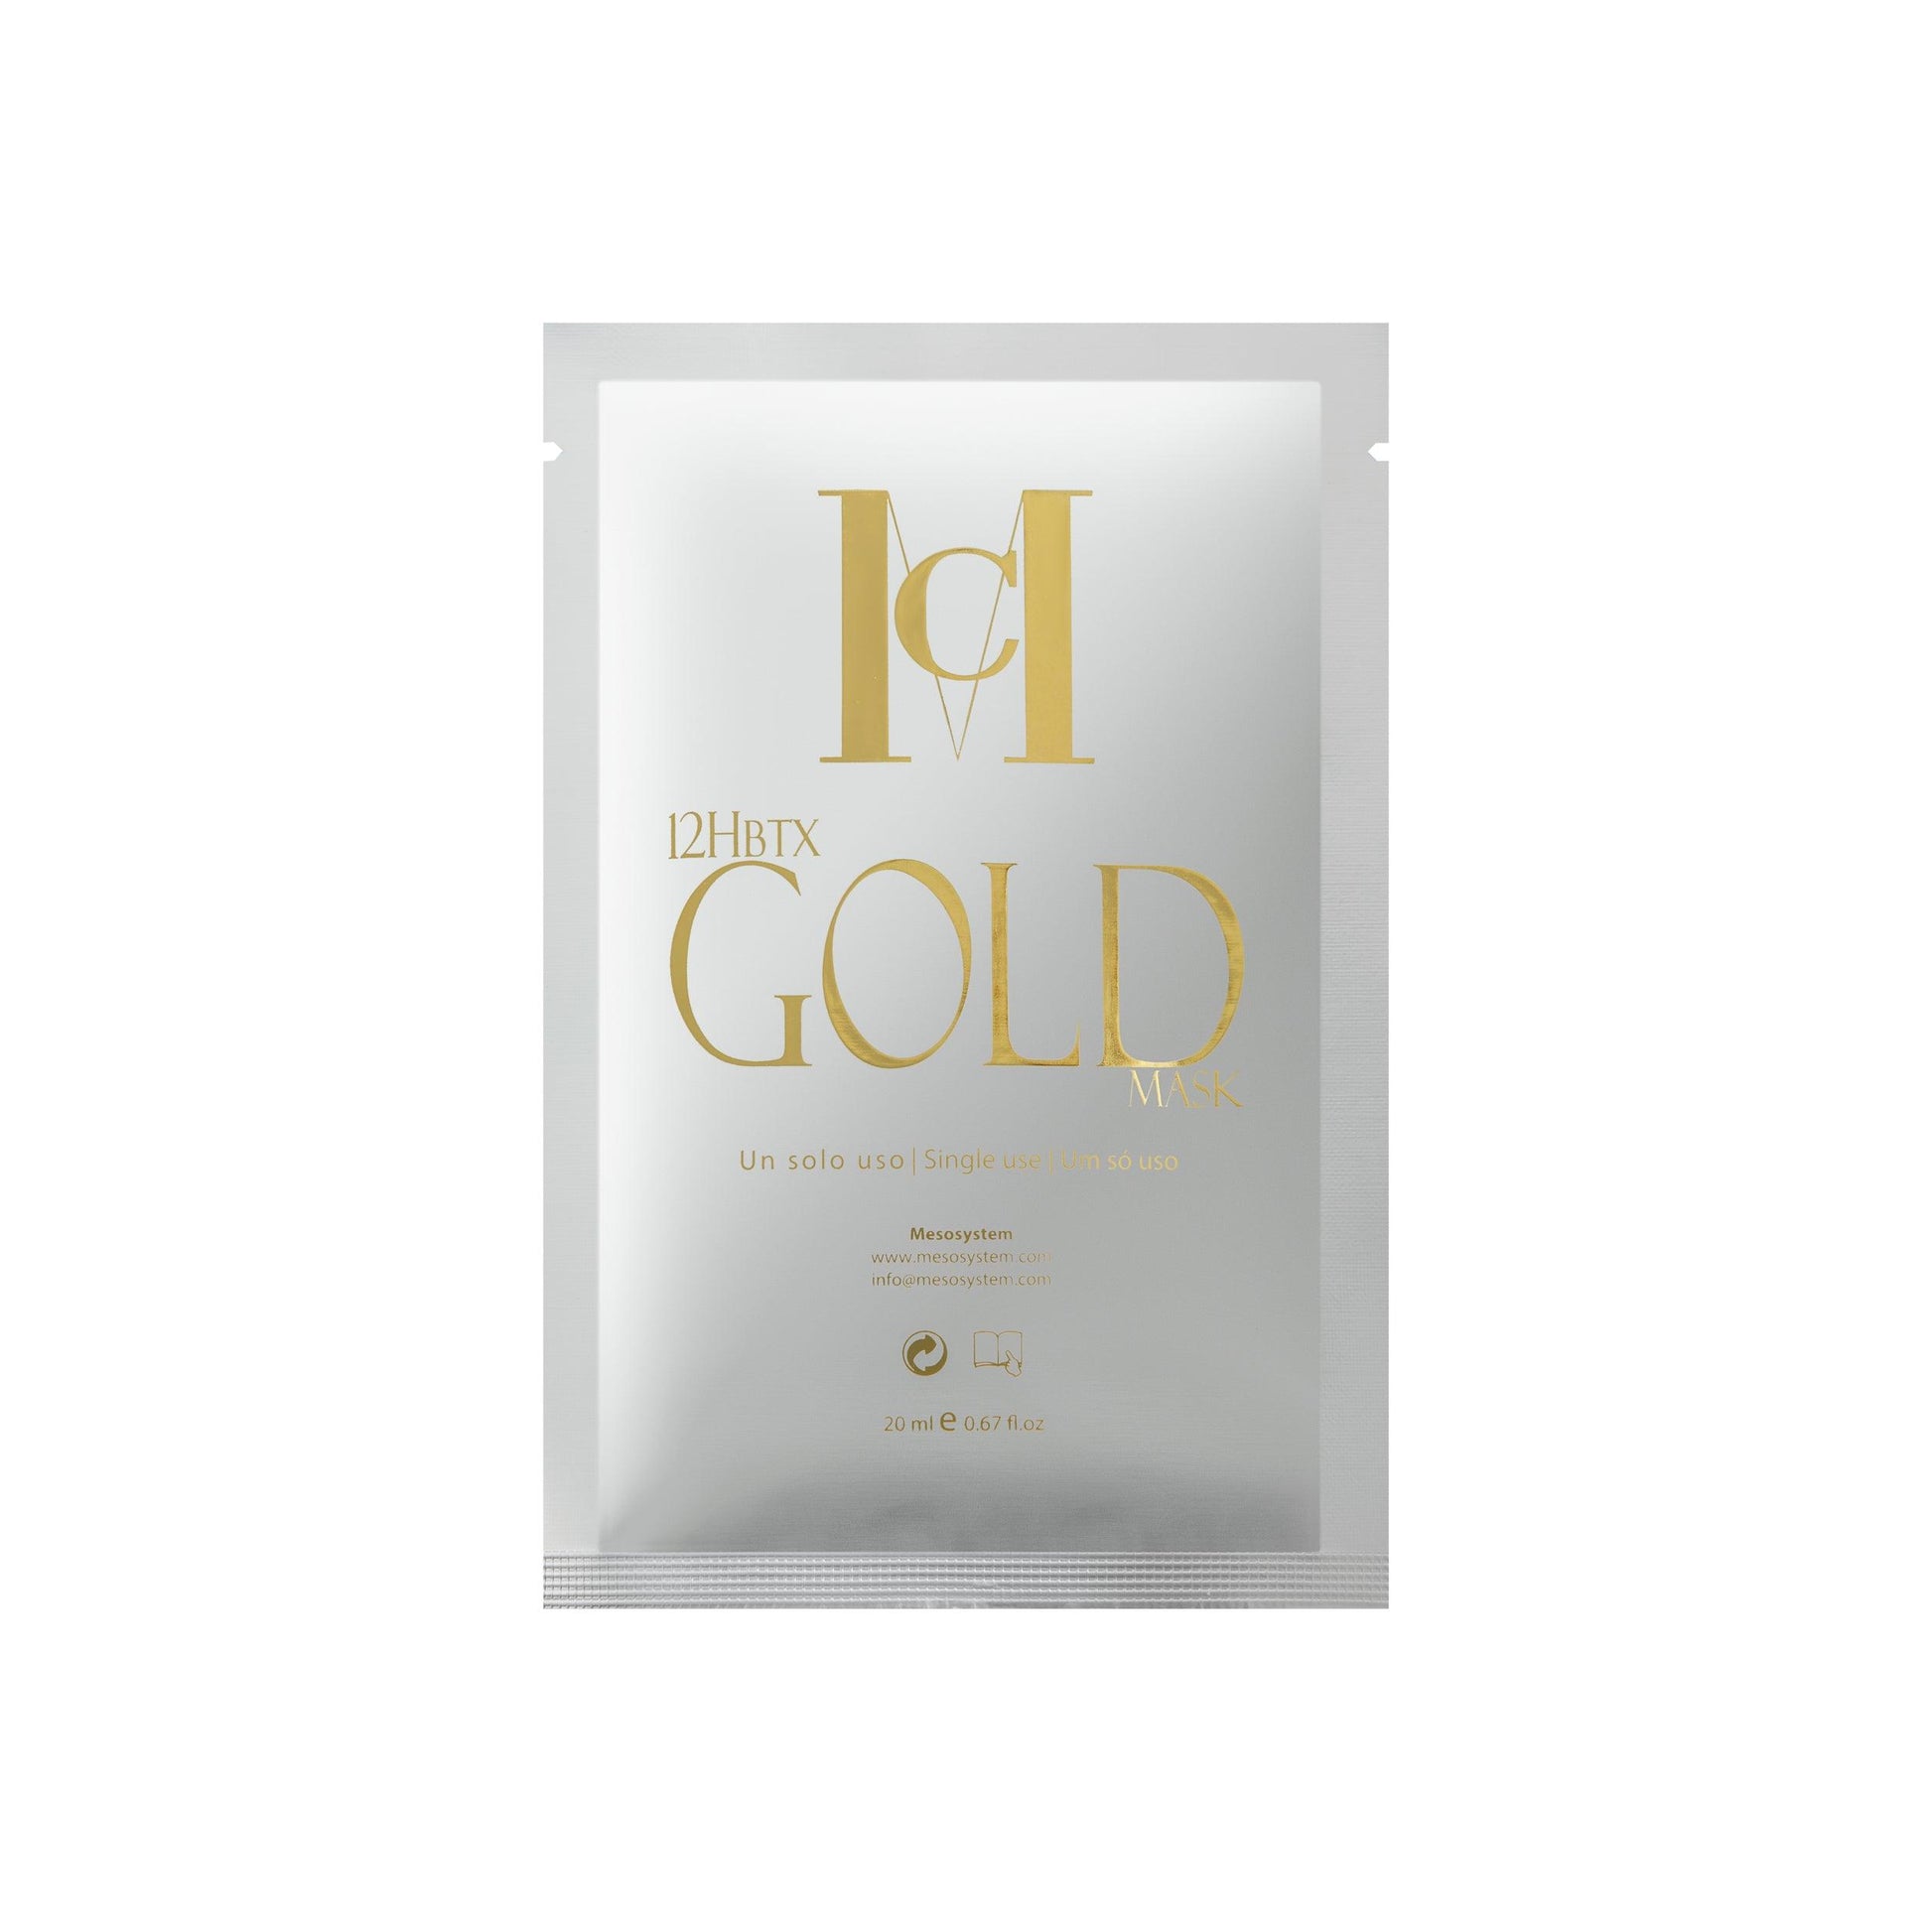 12HBTX Gold - MCCM Medical Cosmetics